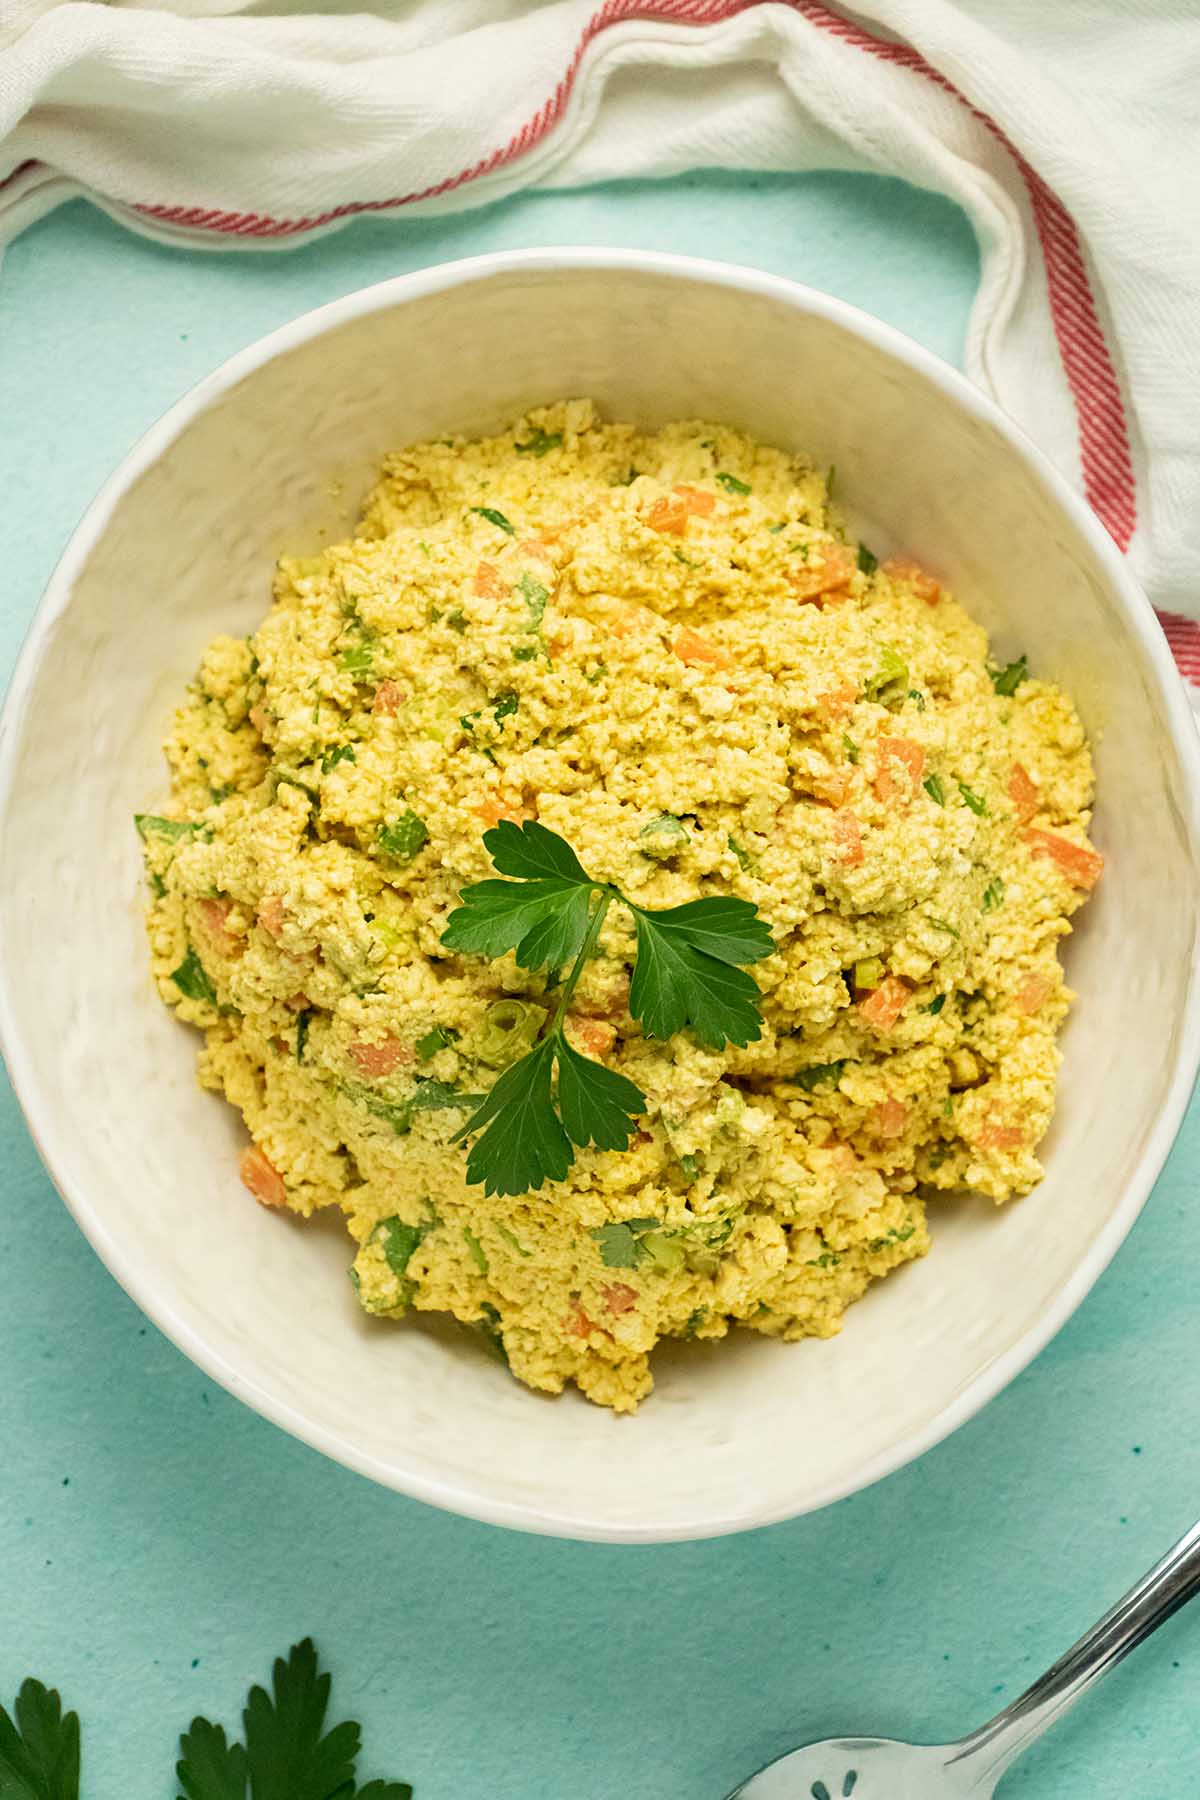 bowl of vegan egg salad with parsley garnish